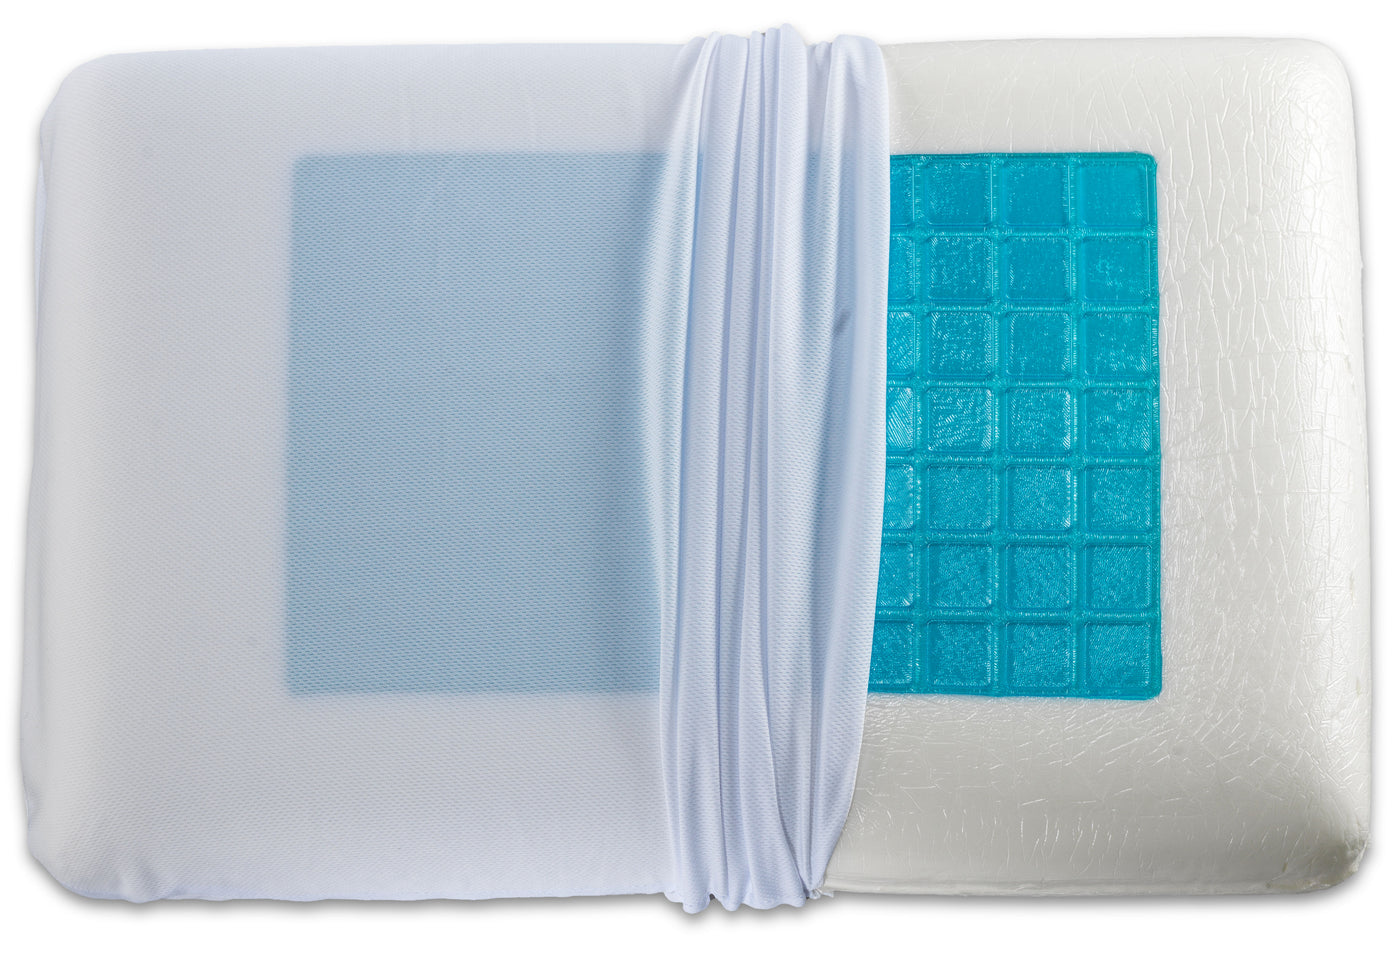 Cool Gel Standard Memory Foam Pillow